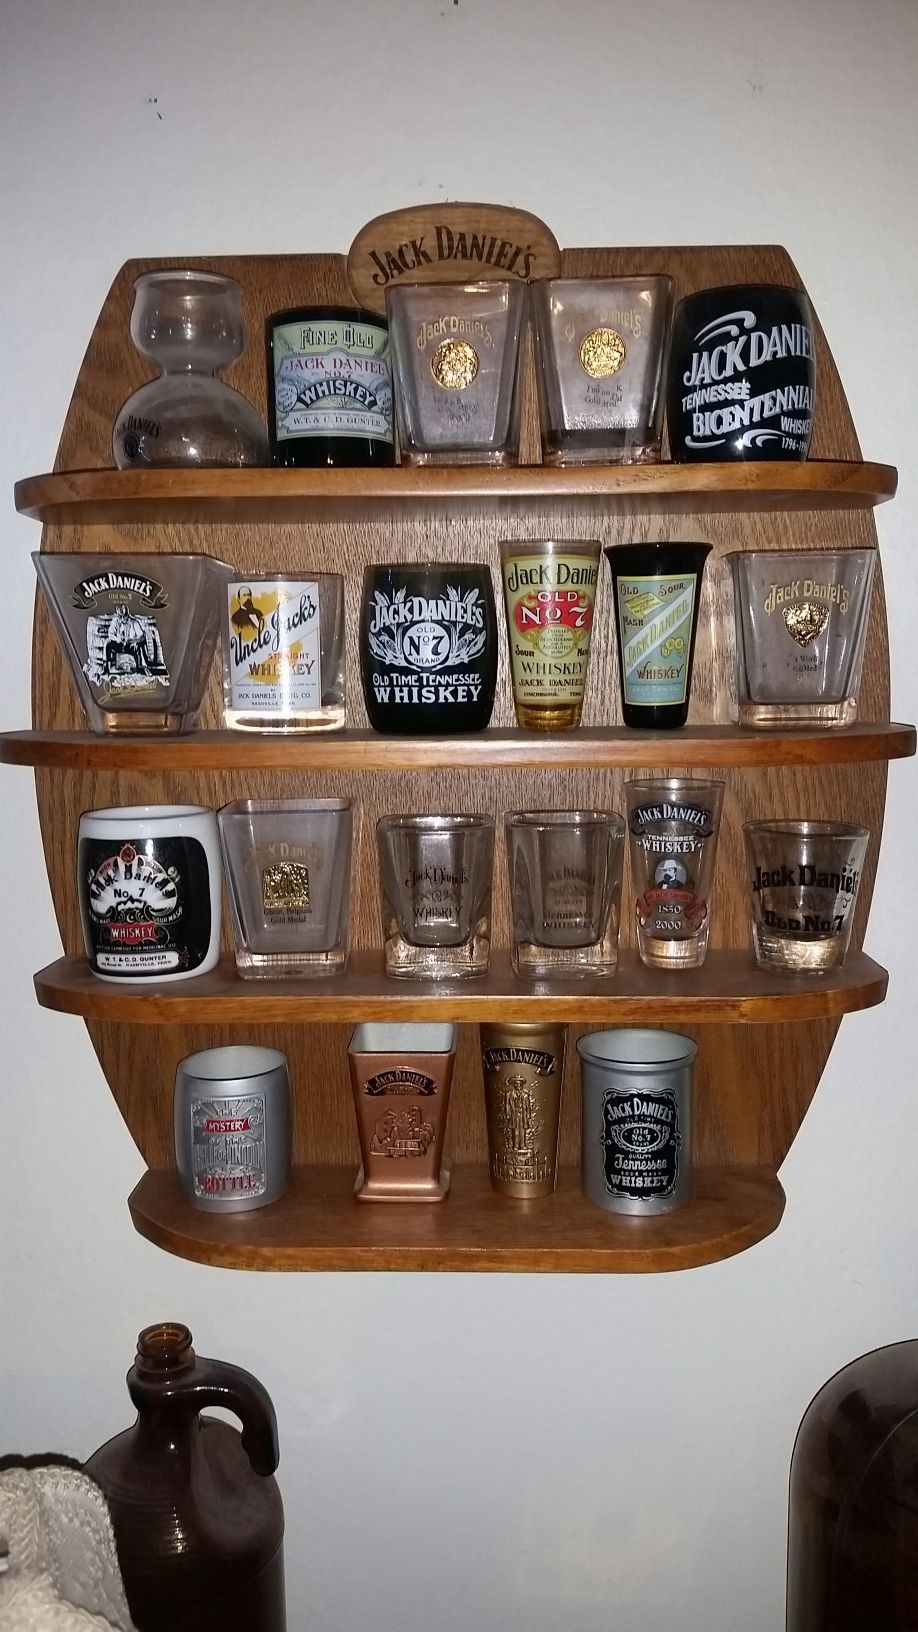 Legends of jack daniels shot glass collection